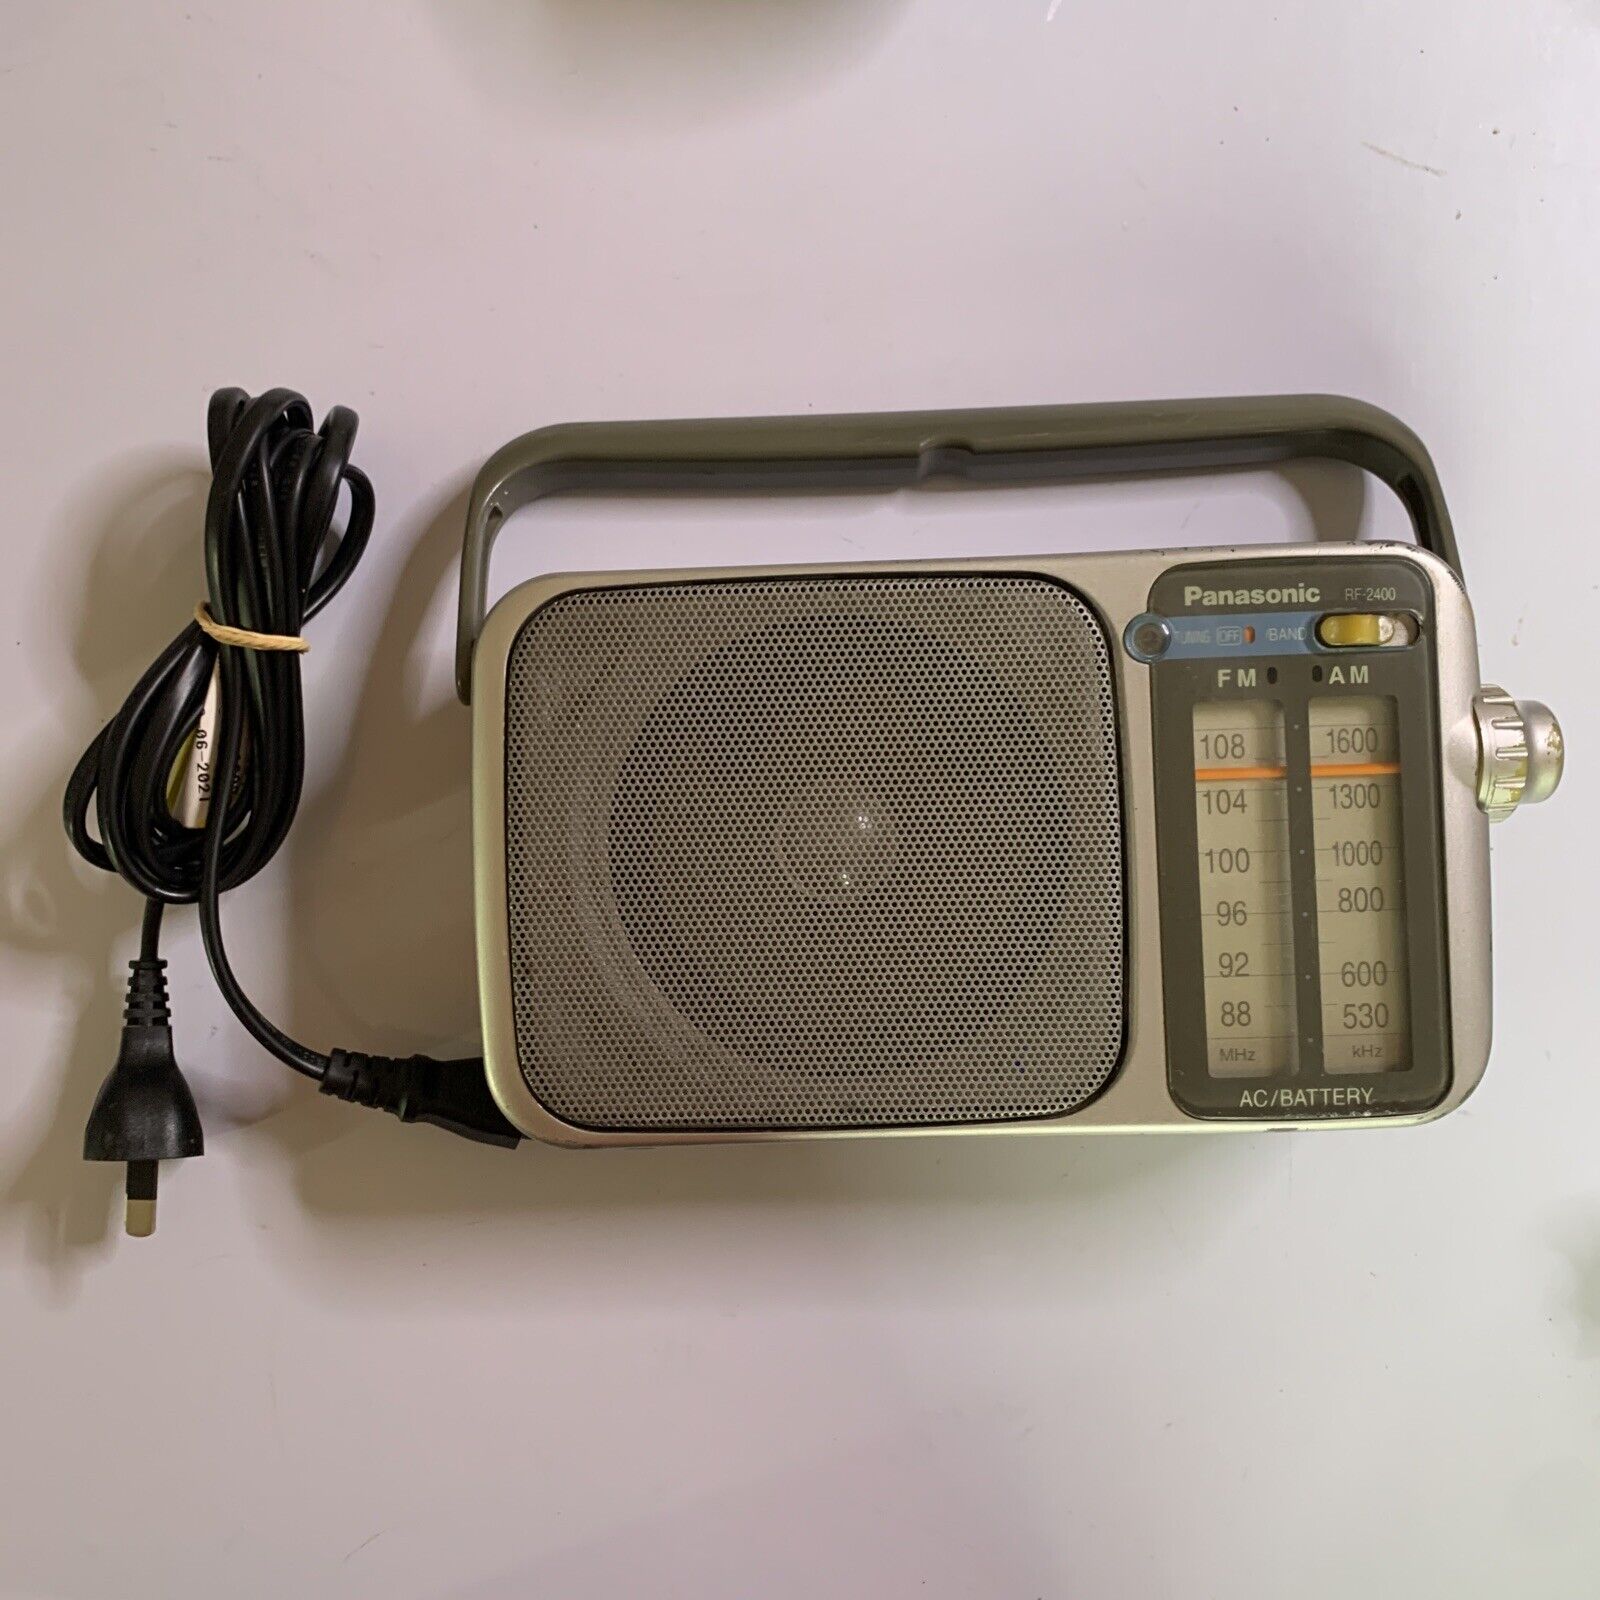 Panasonic RF-2400 Portable AM/FM Radio with Speakers – Retro Unit